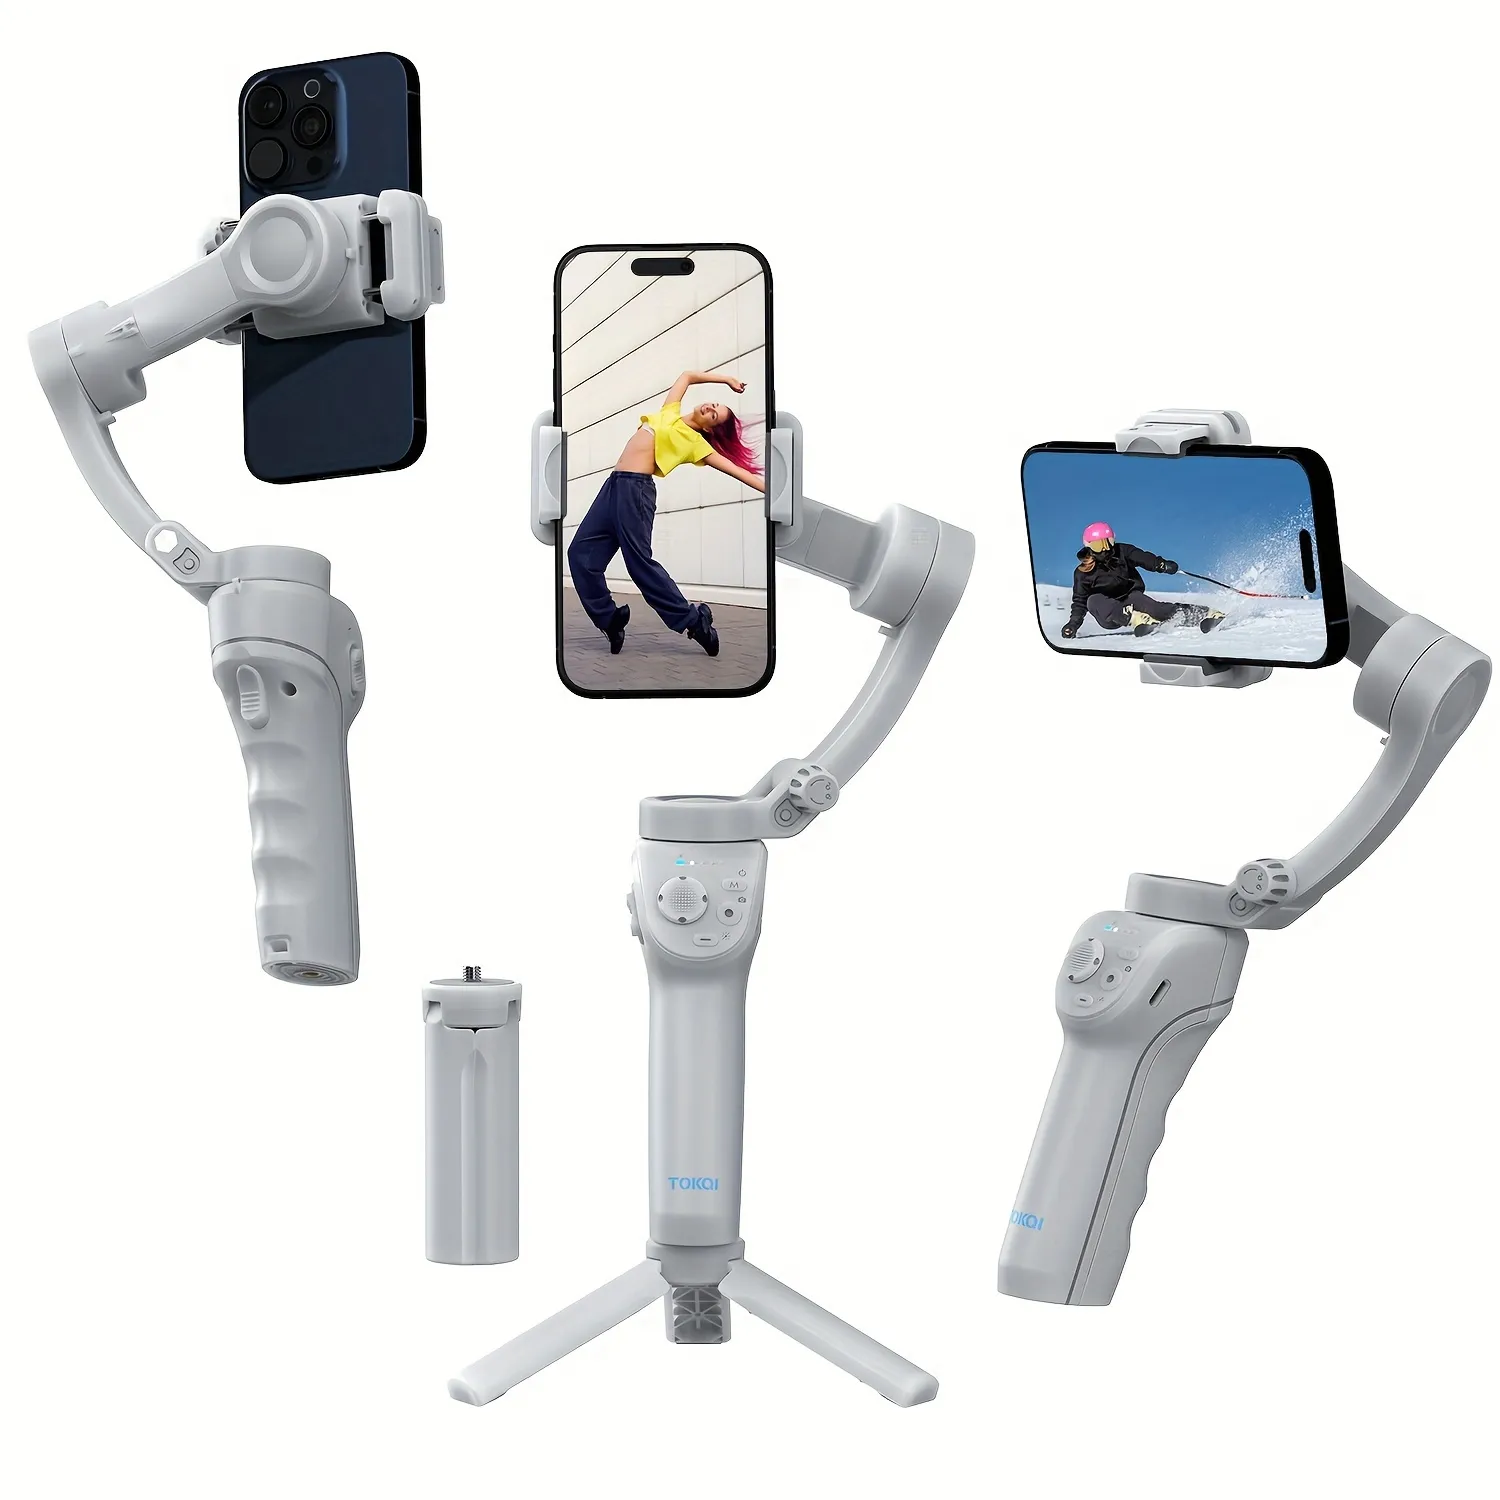 Smartphone Gimbal Stabilizer, Smart Gimbal, 3 Axis Phone Gimbal, Target Tracking, Portable Foldable, Auto Tracking Phone Stabilizer, Smartphone Gimbal